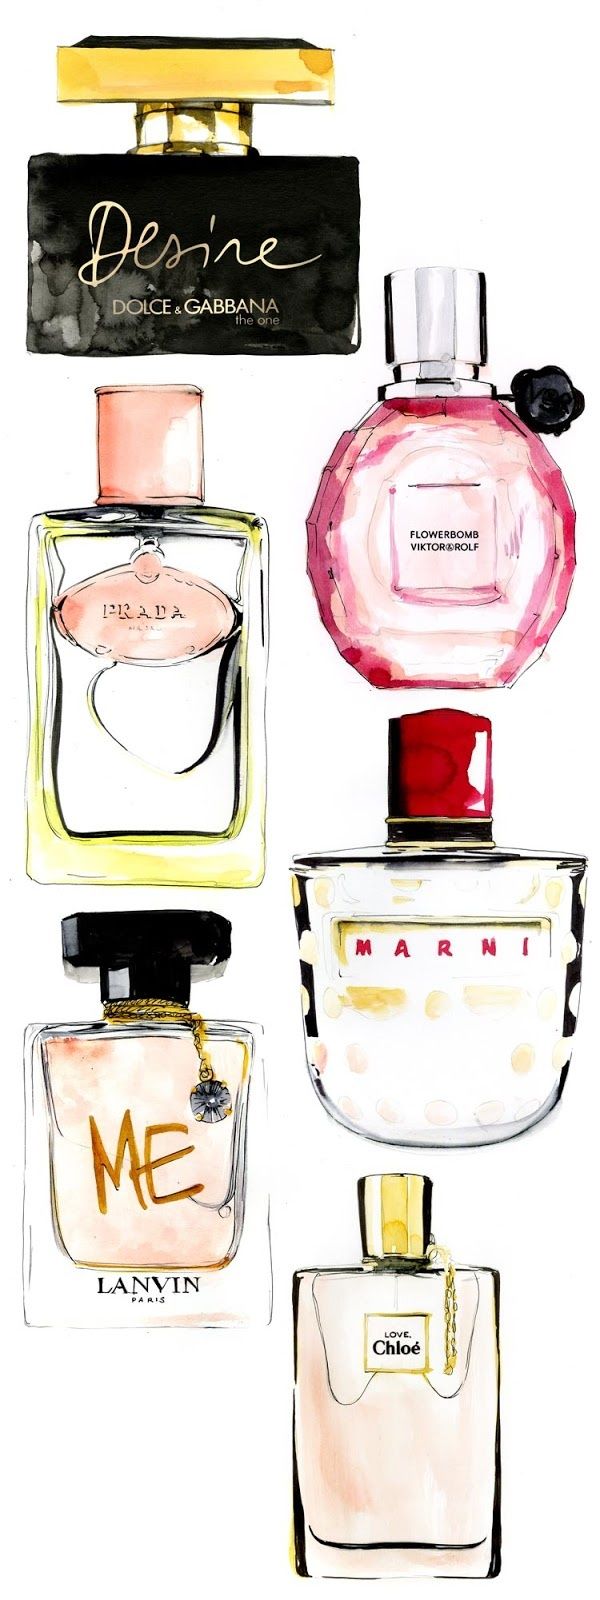 Purfum Sketchs Perfume Art Chanel Fragrance